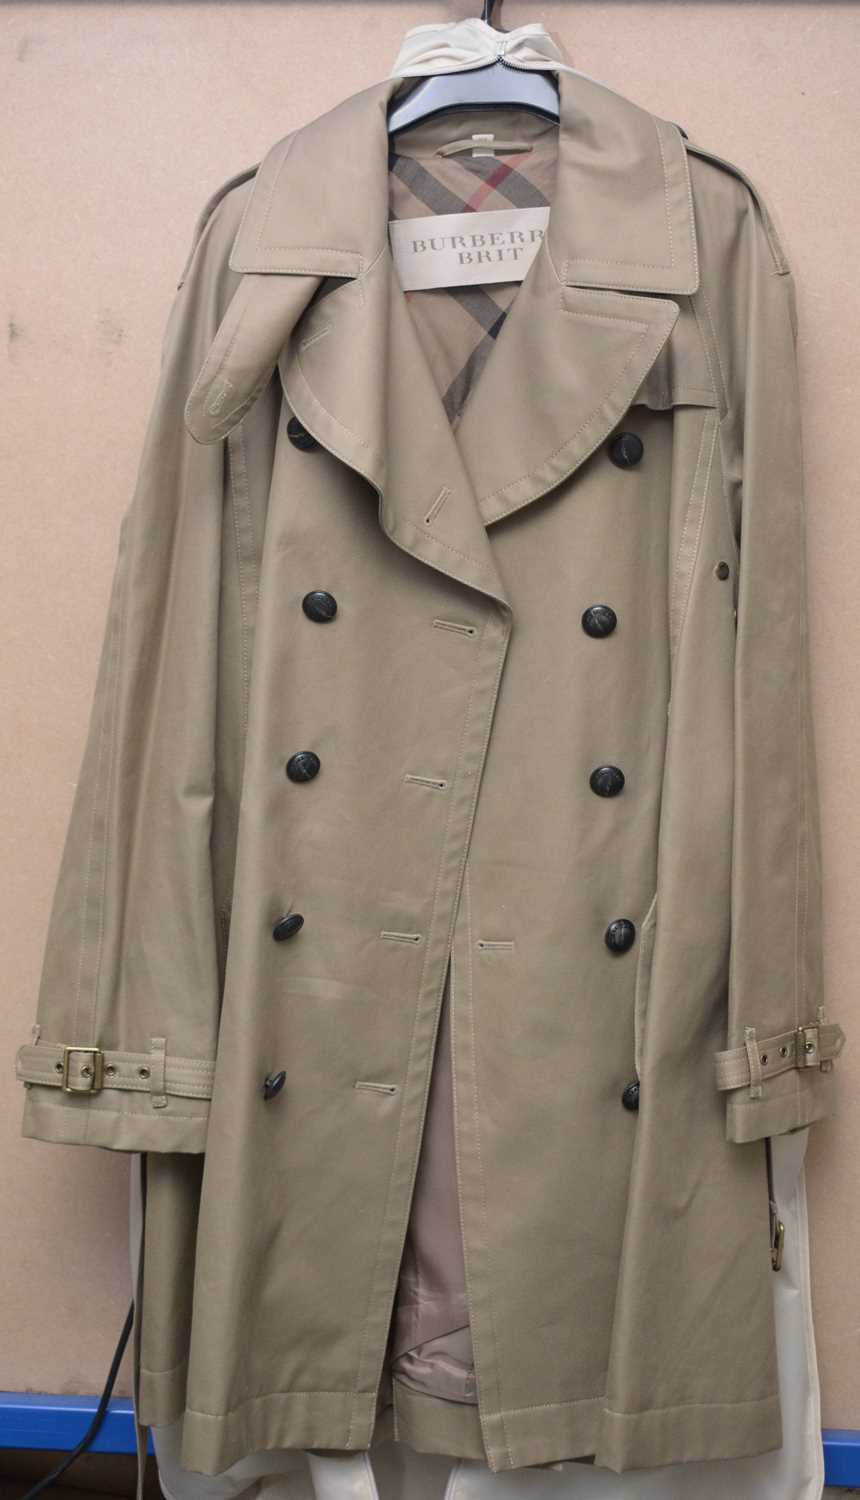 Lot 318 - A Burberry Brit raincoat